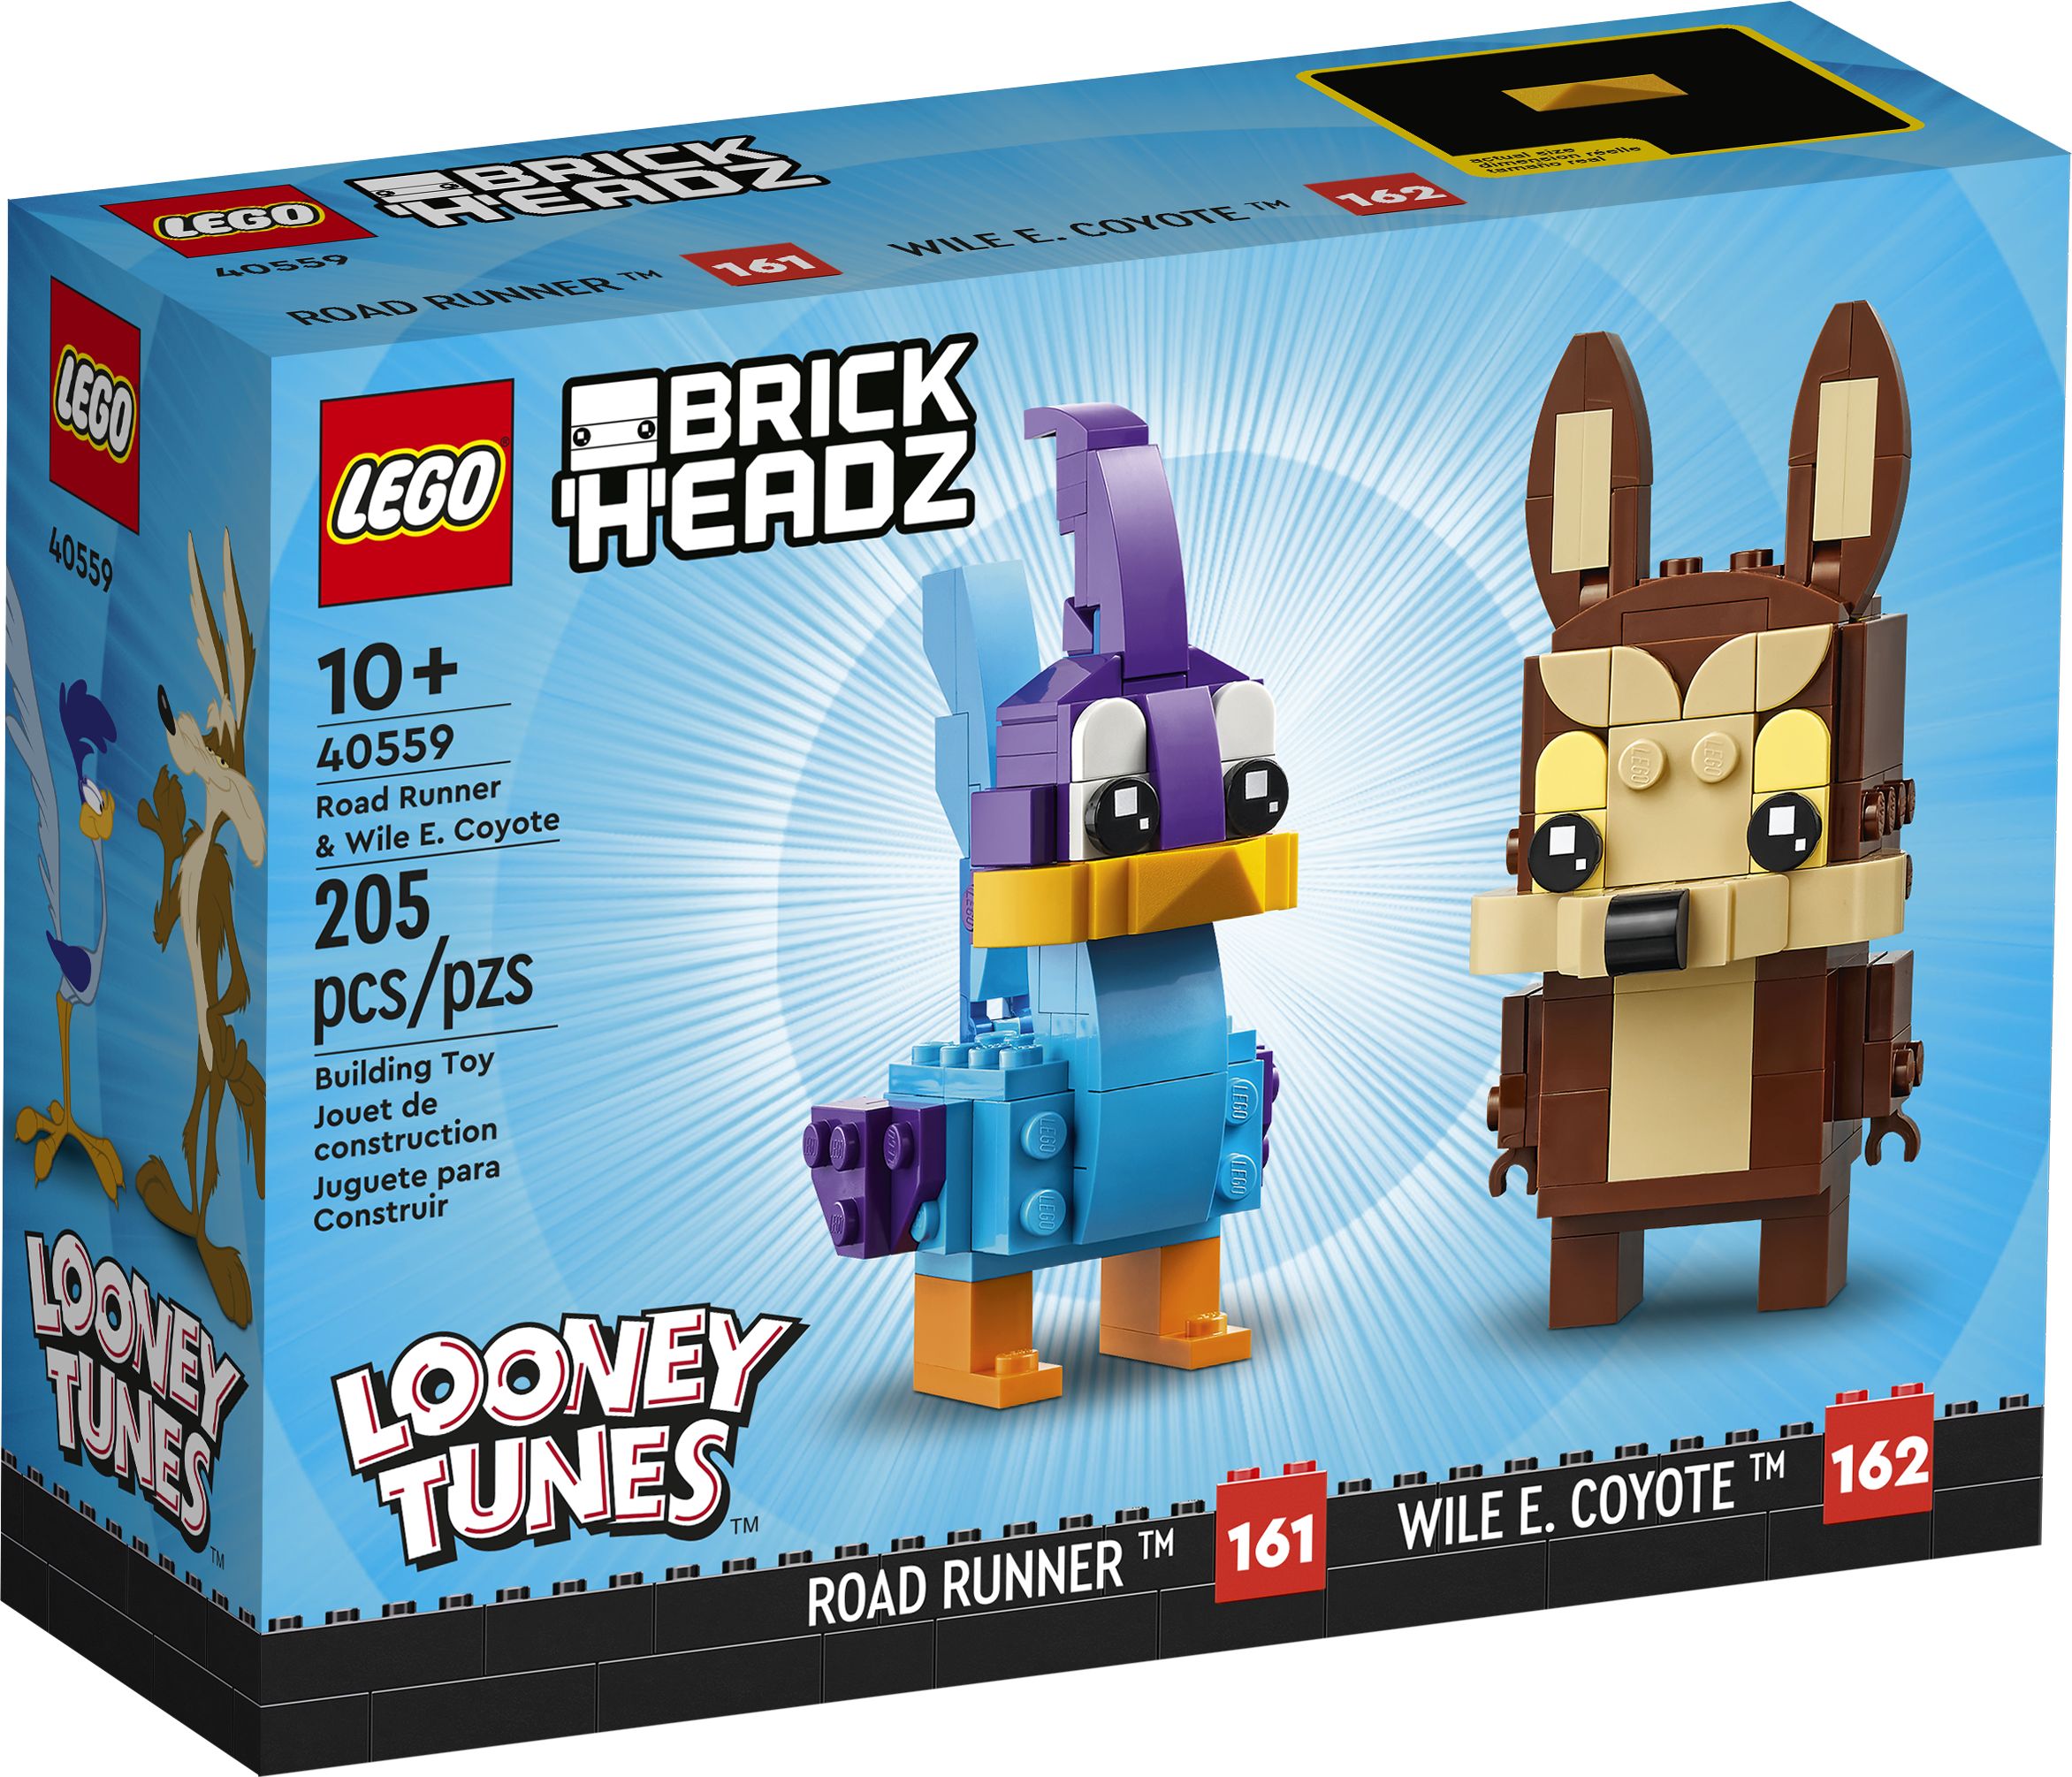 LEGO BrickHeadz 40559 Road Runner & Wile E. Coyote LEGO_40559_Box1_v39.jpg